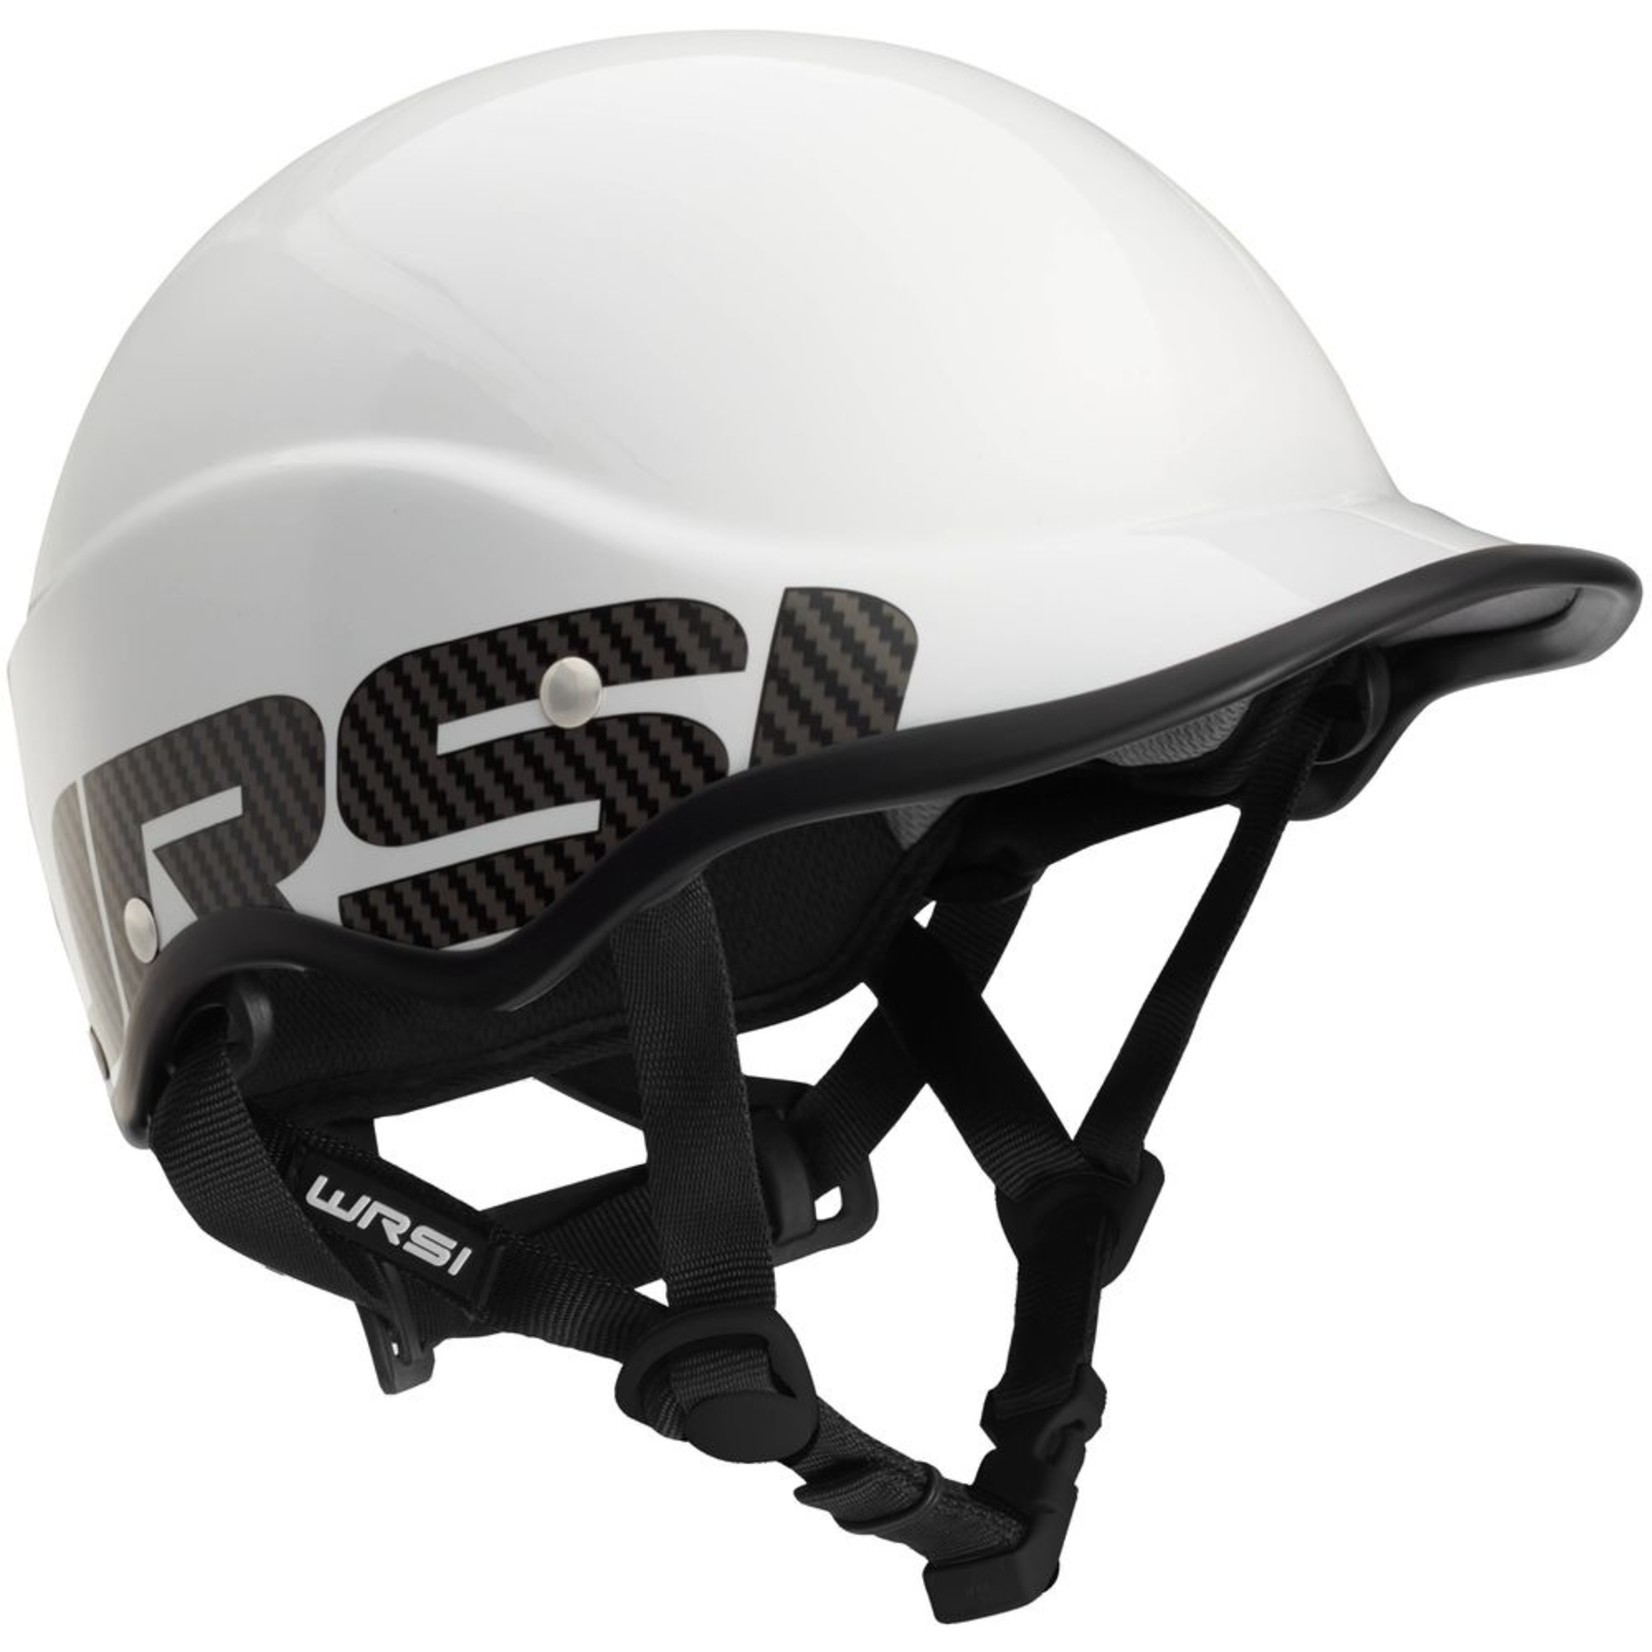 NRS WRSI Trident Helmet